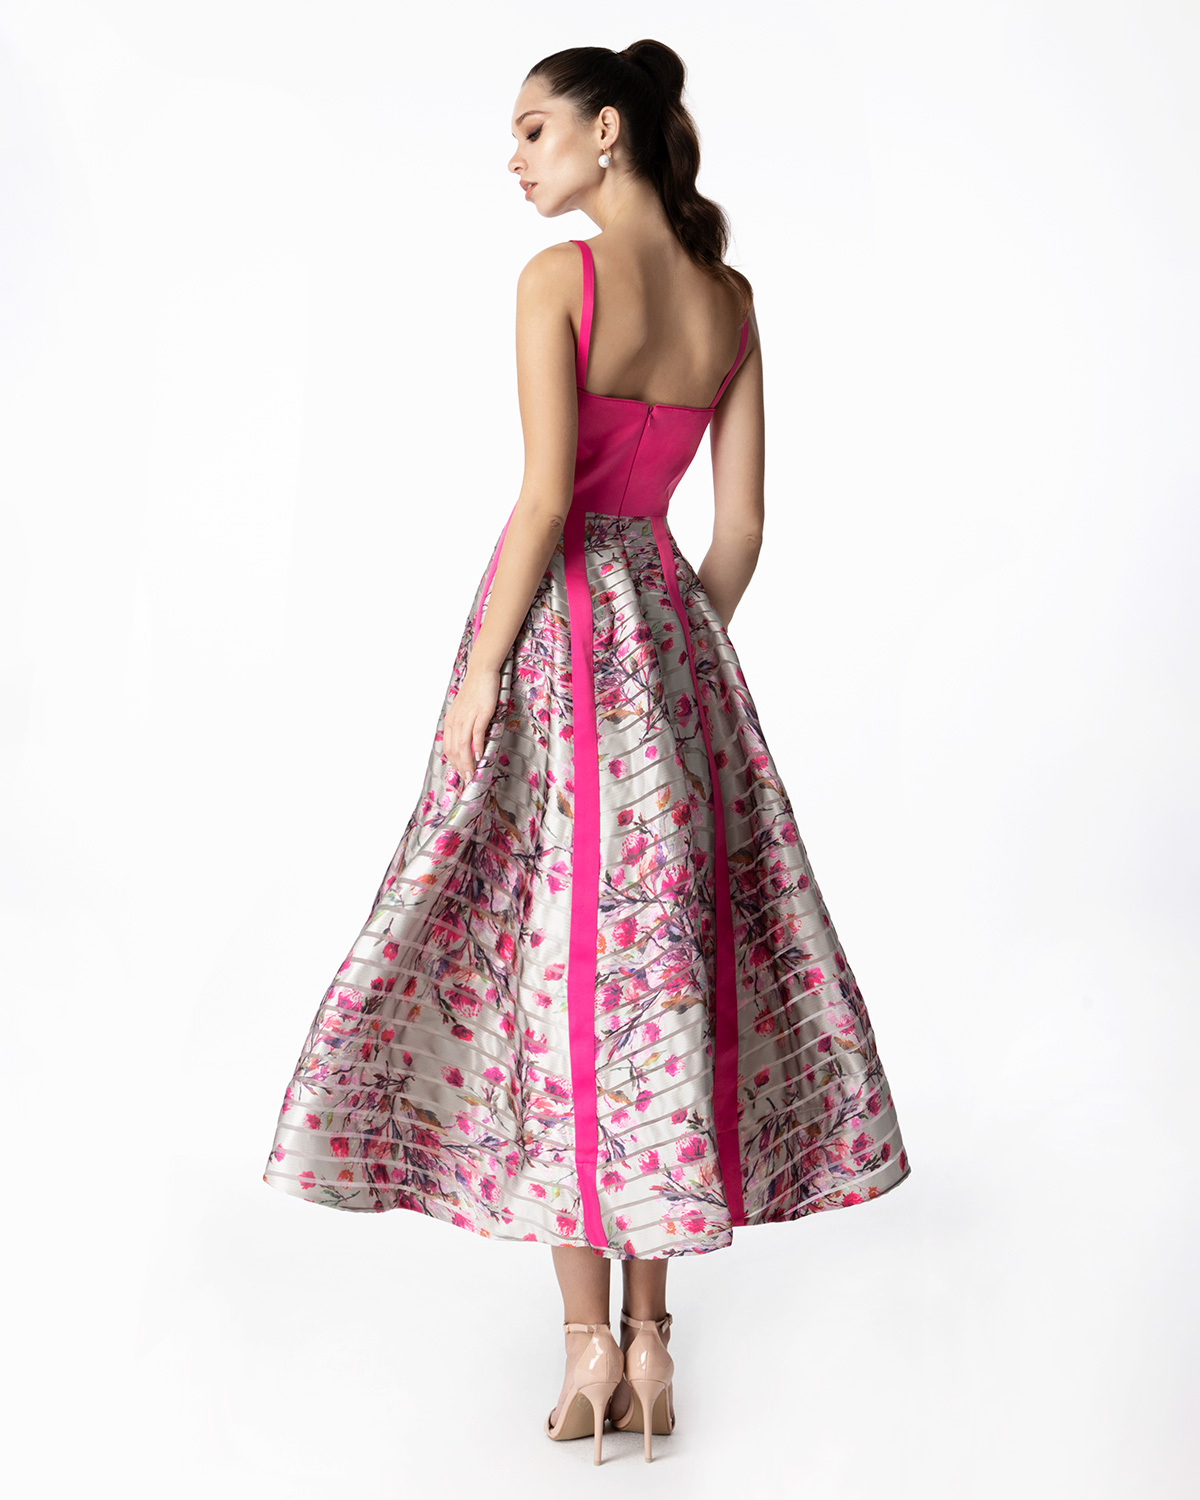 Коктейльные платья / Cocktail midi dress with printed skirt and solid color top